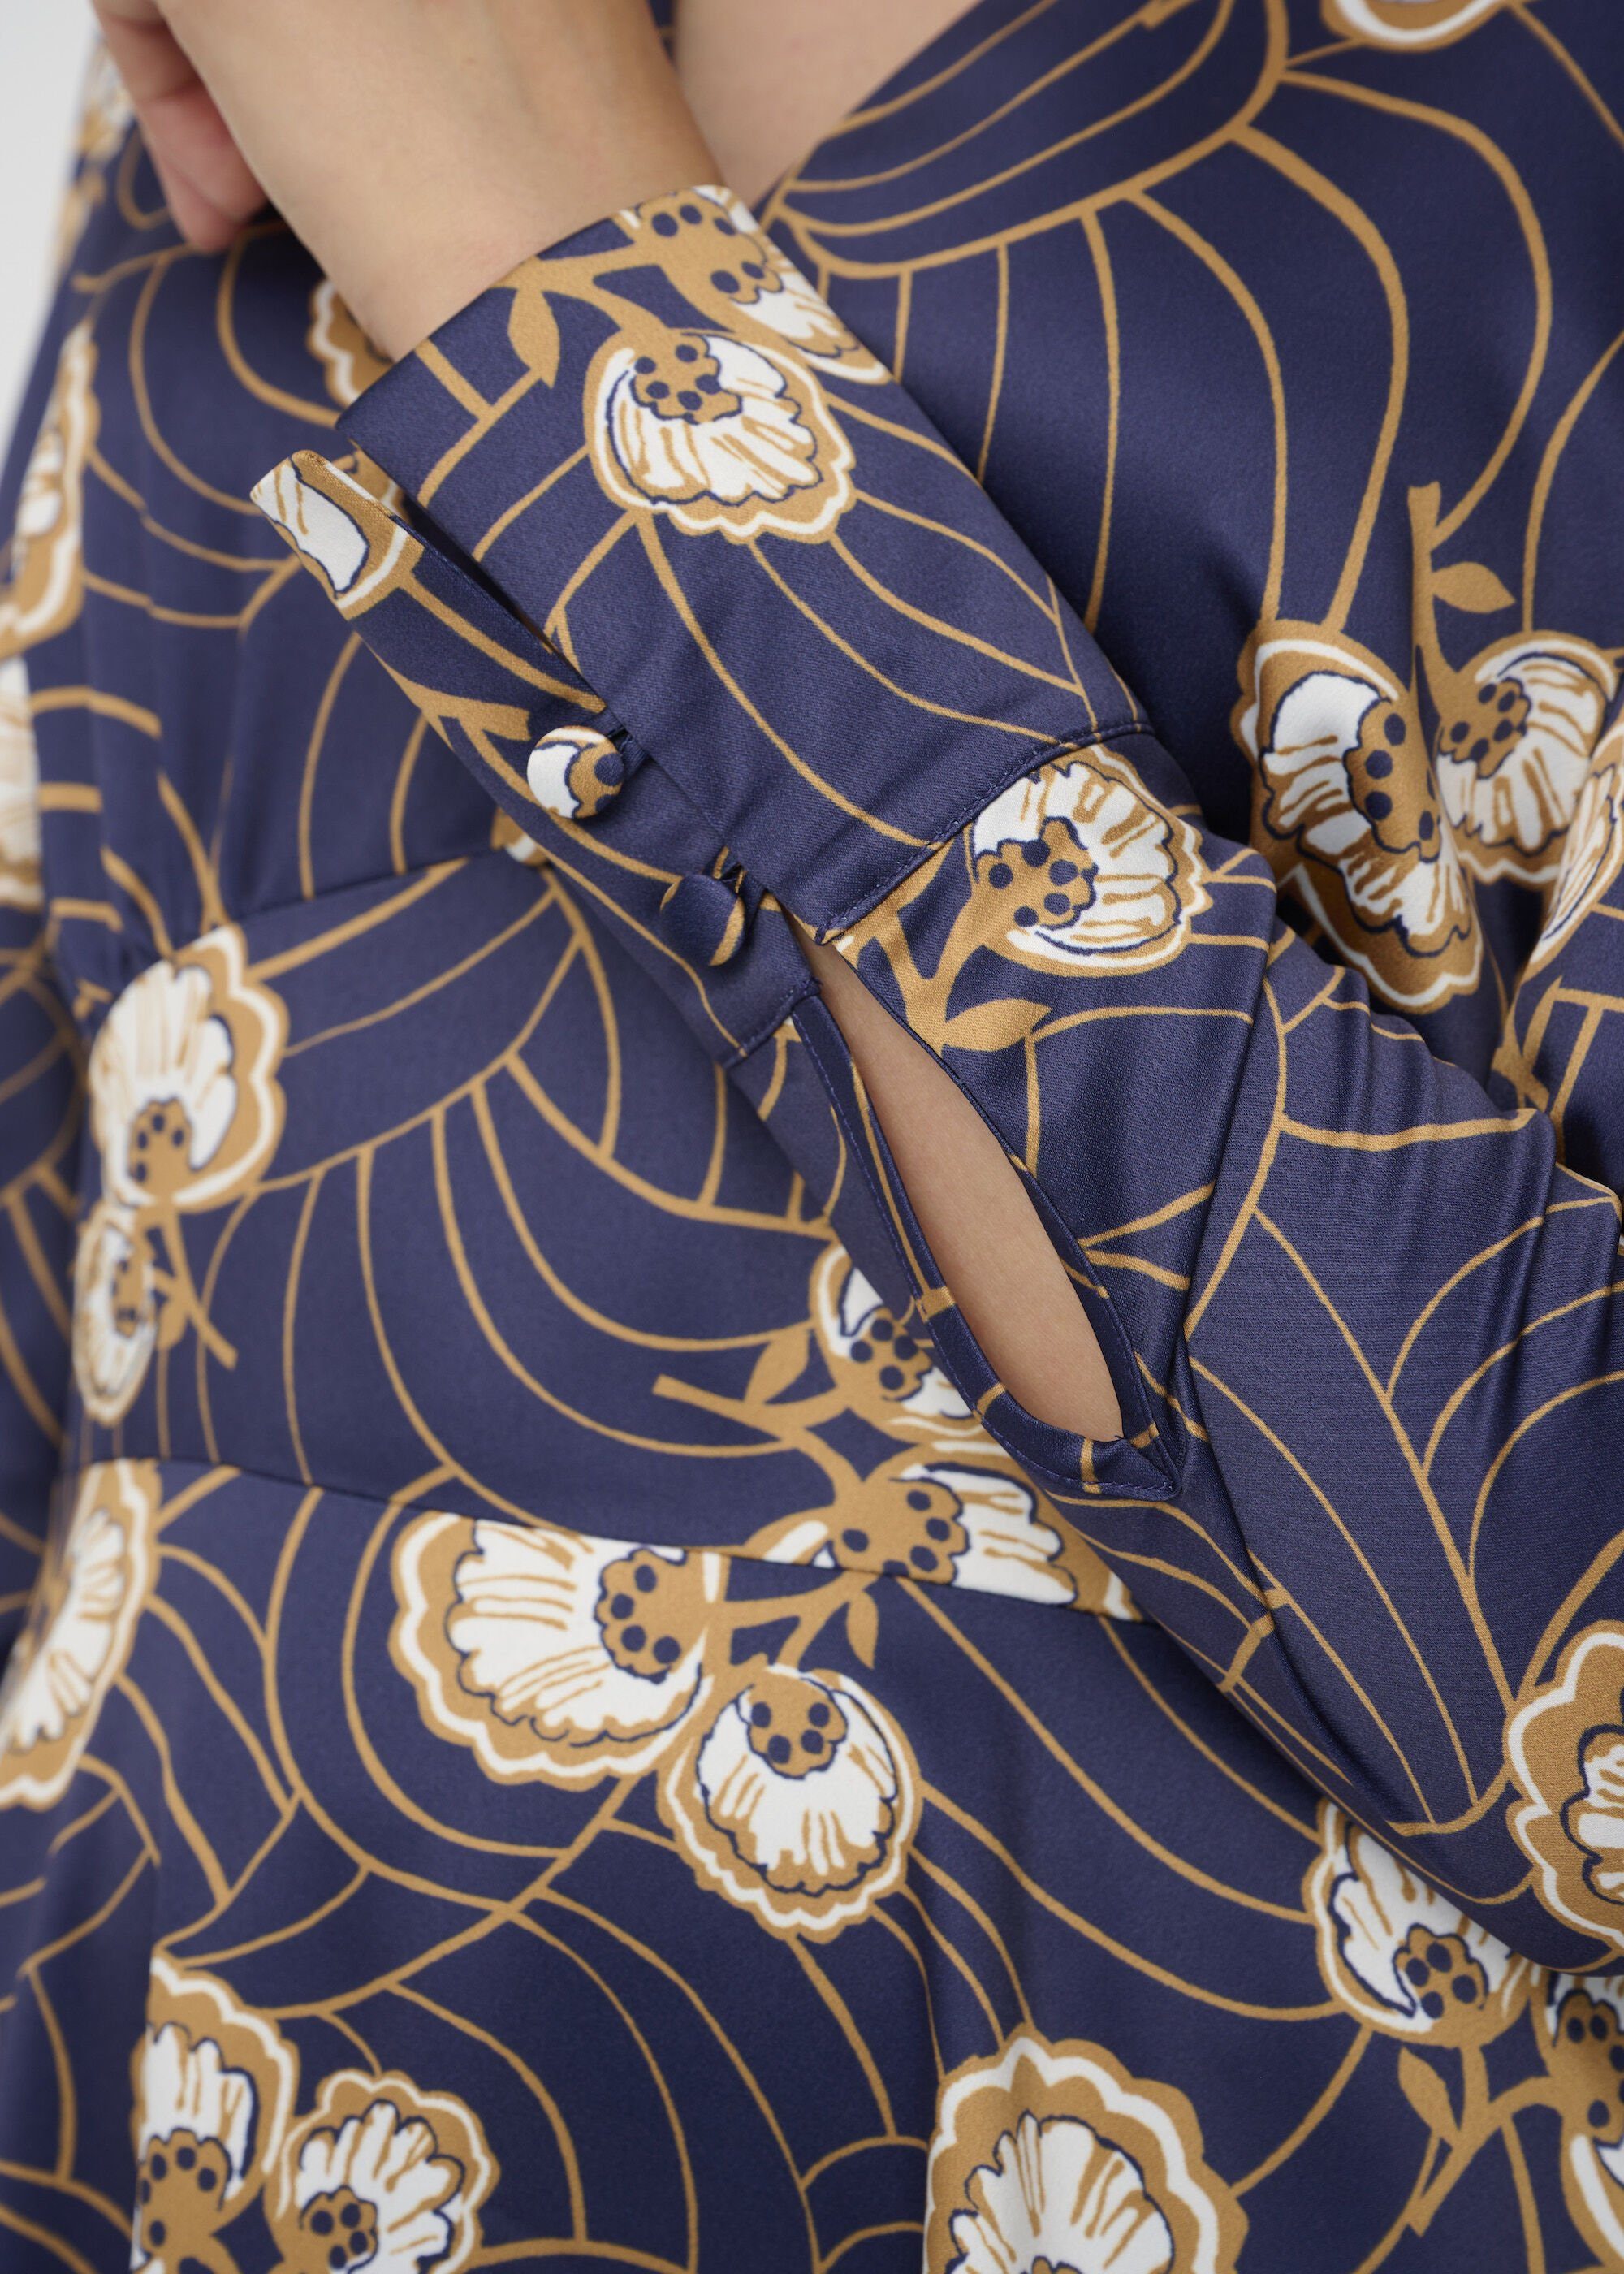 NOUVEAU Kleo glänzendem Abendkleid MIDI DRESS FLARE in mit Blumenprint FIT Satin MIDNIGHT &